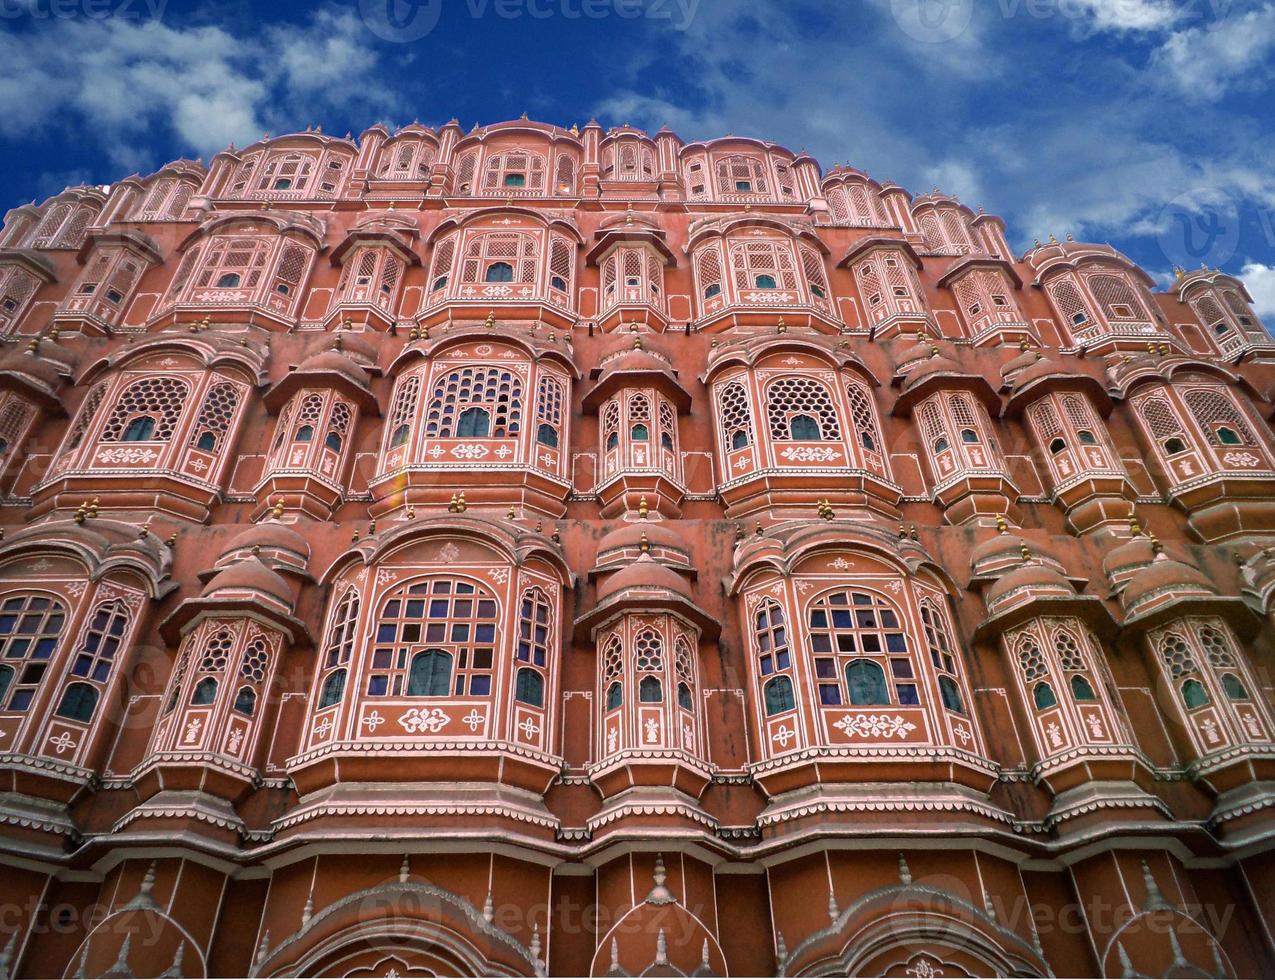 Hawa mahal of the palace in jaipur country photo